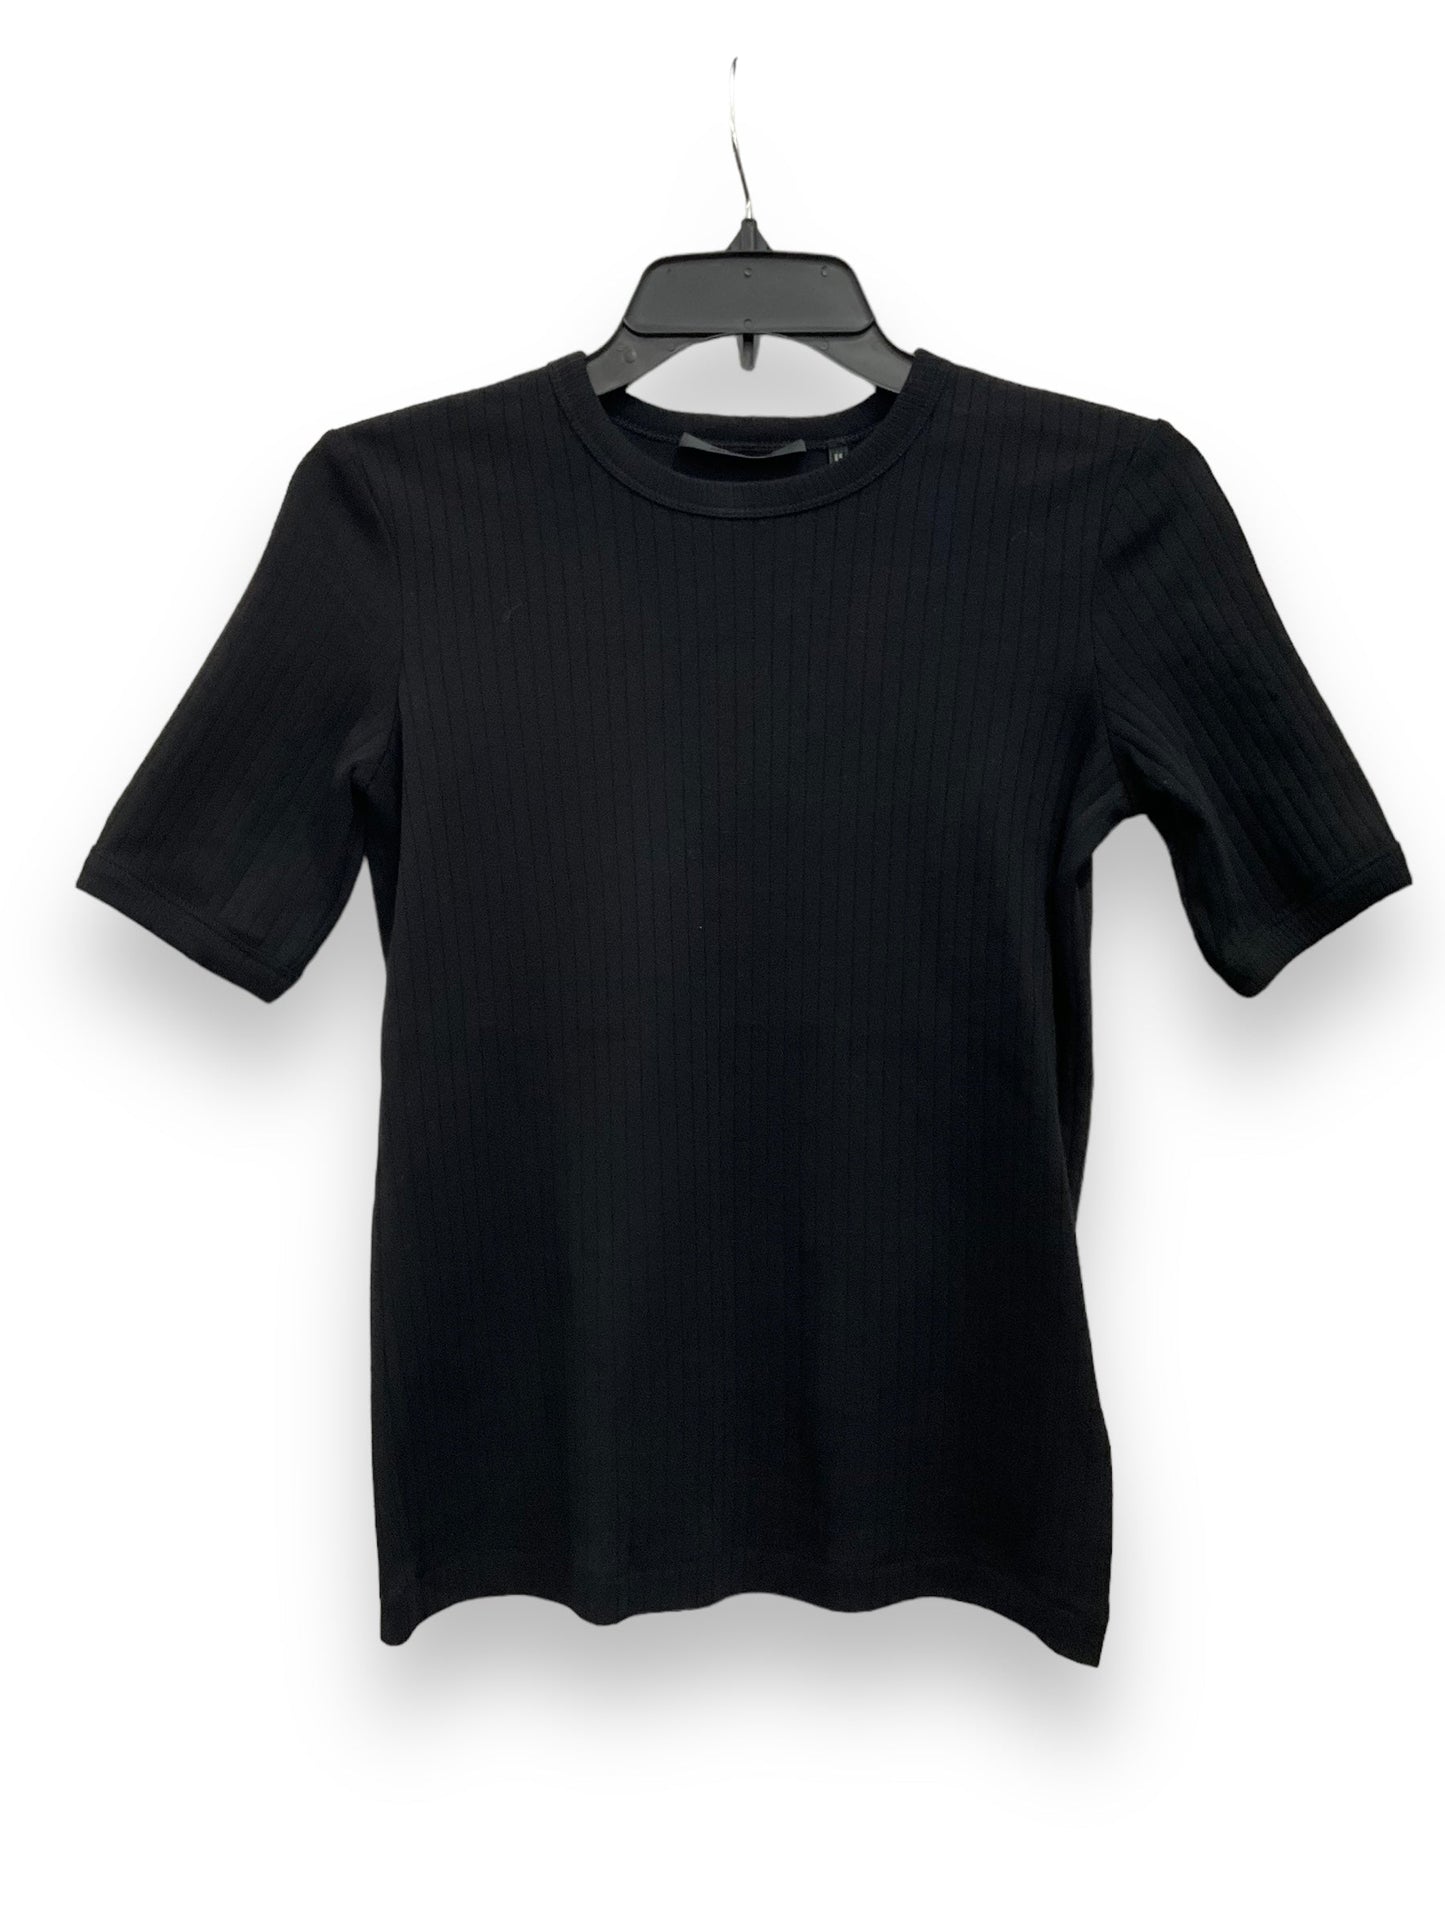 Black Top Short Sleeve Helmut Lang, Size S